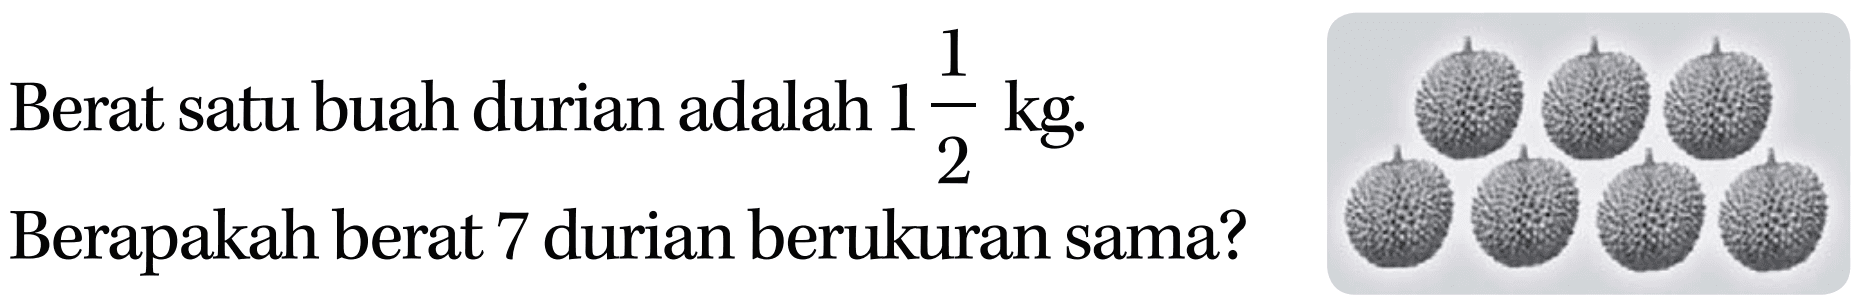 Berat satu buah durian adalah 1 1/2 kg. Berapakah berat 7 durian berukuran sama?